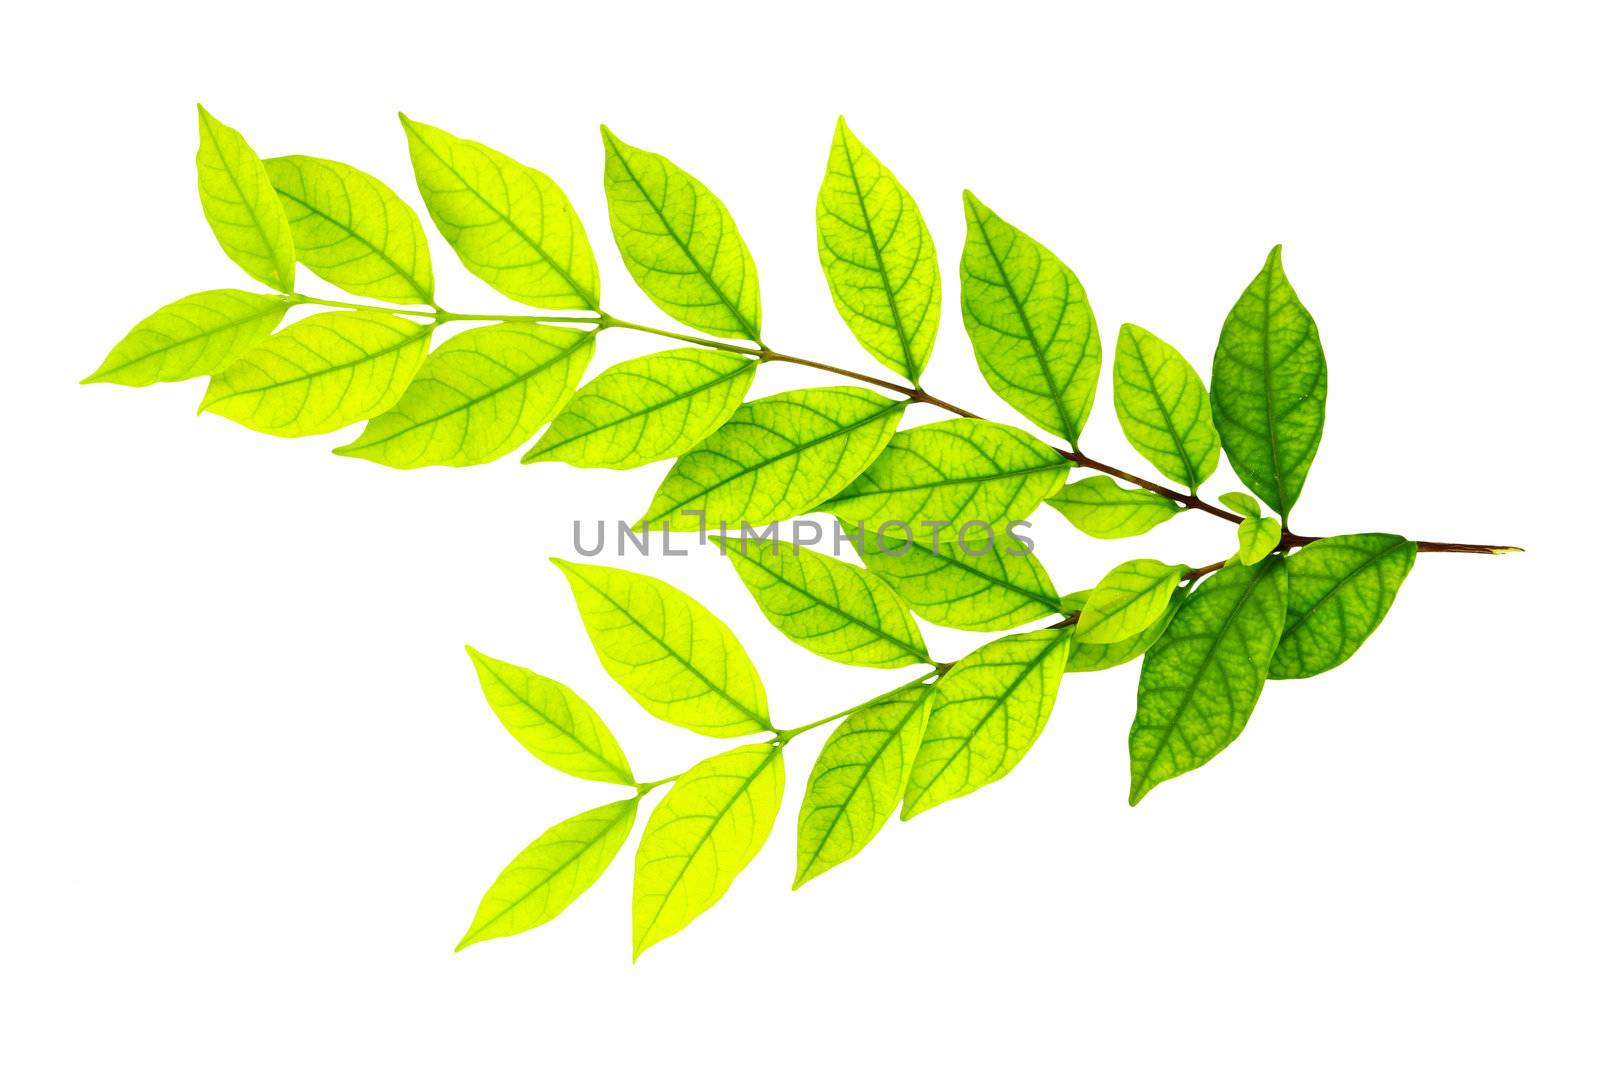 Green leaf isolated on white background by bajita111122